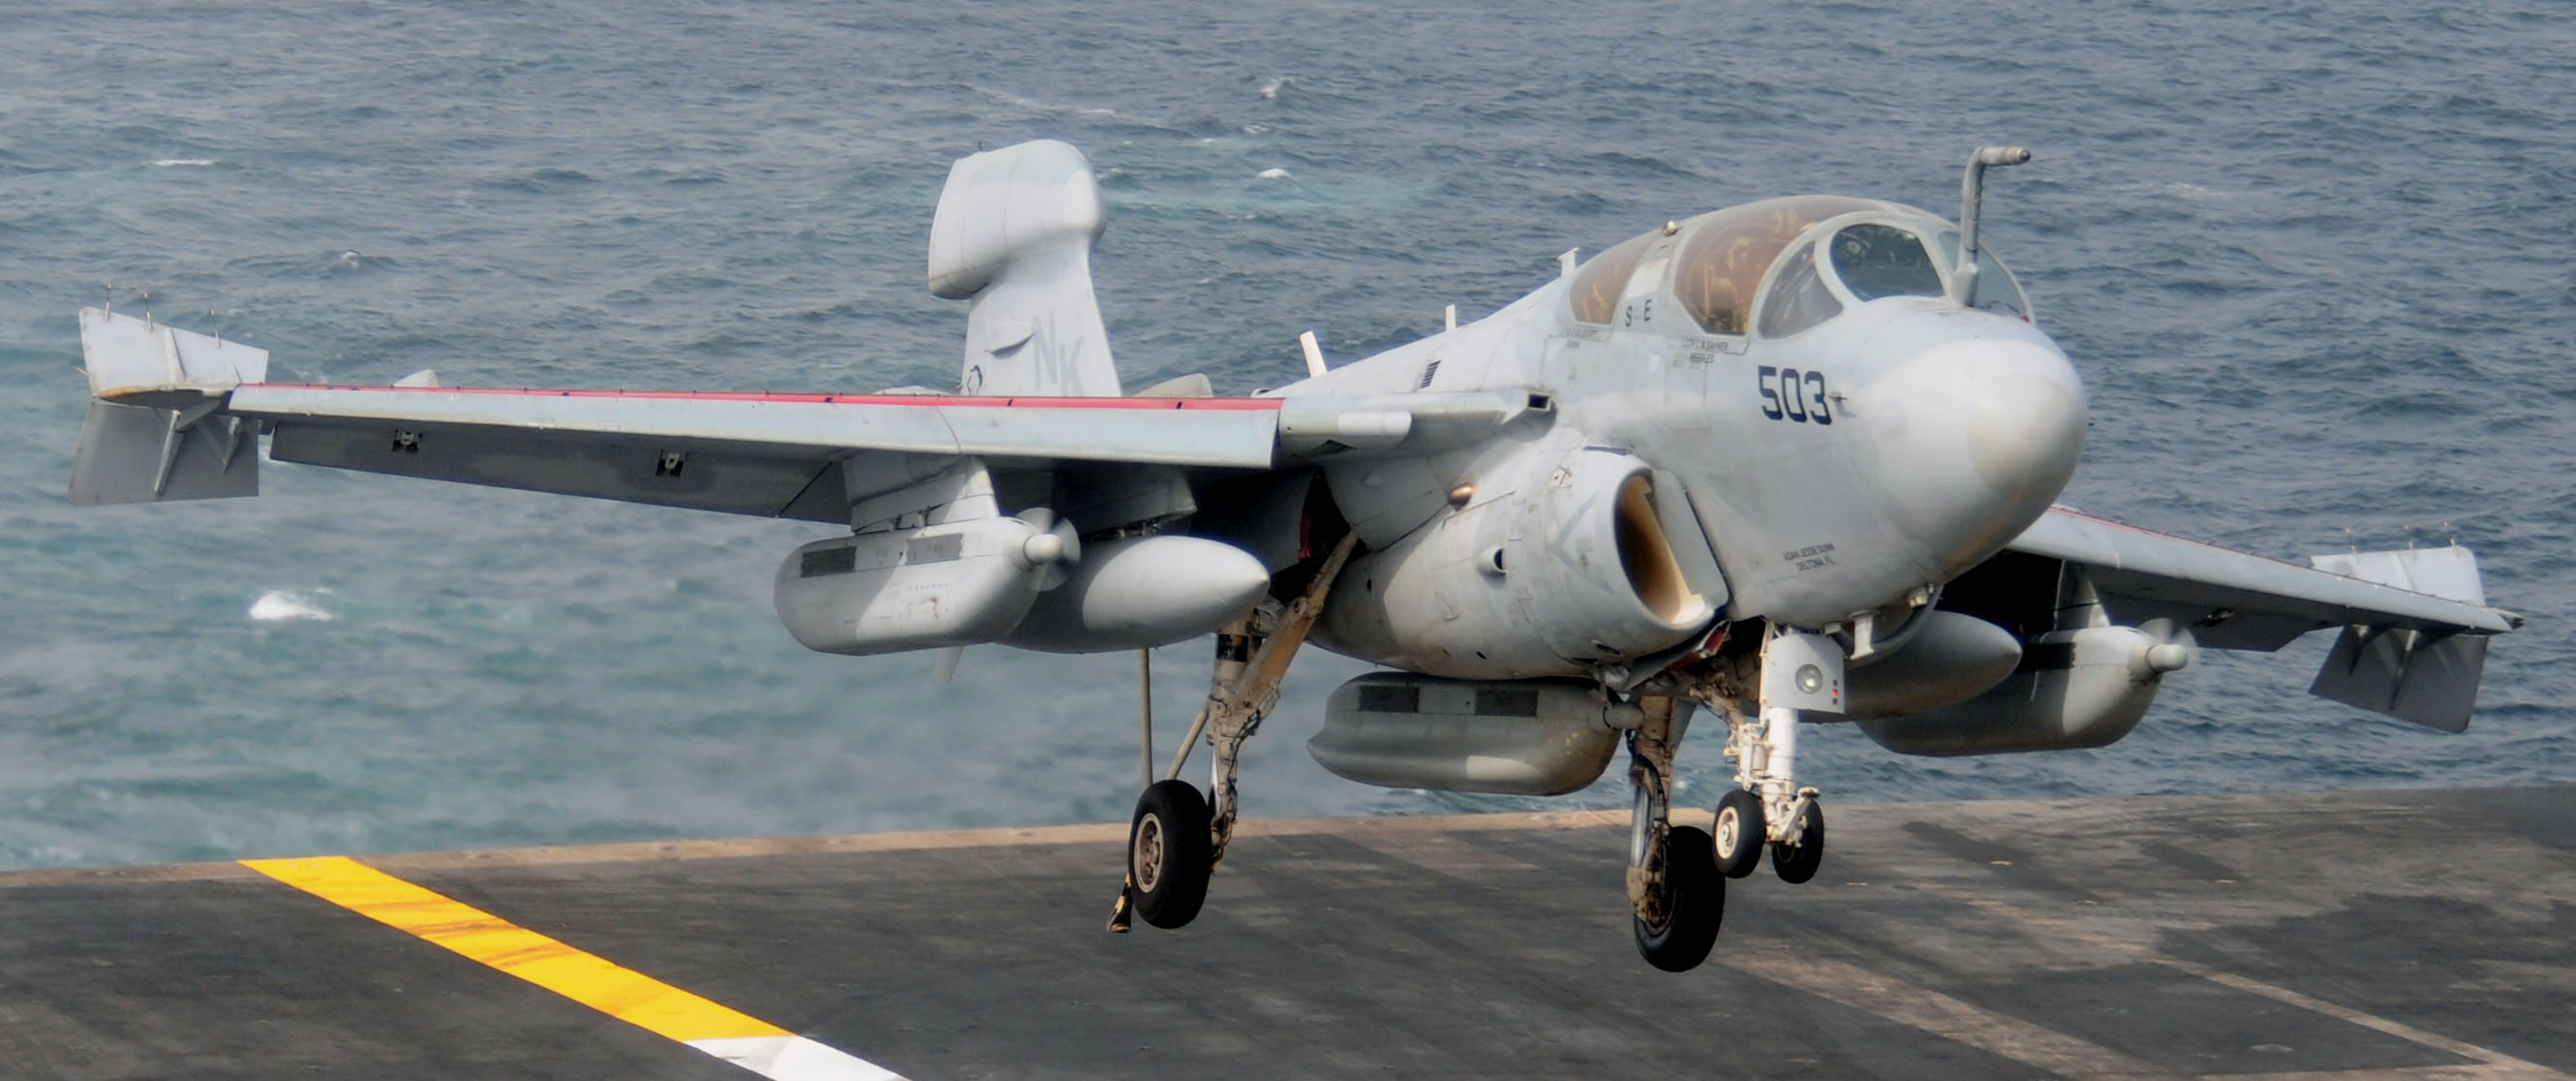 vaq-139 cougars electronic attack squadron us navy ea-6b prowler cvw-14 uss ronald reagan cvn-76 36